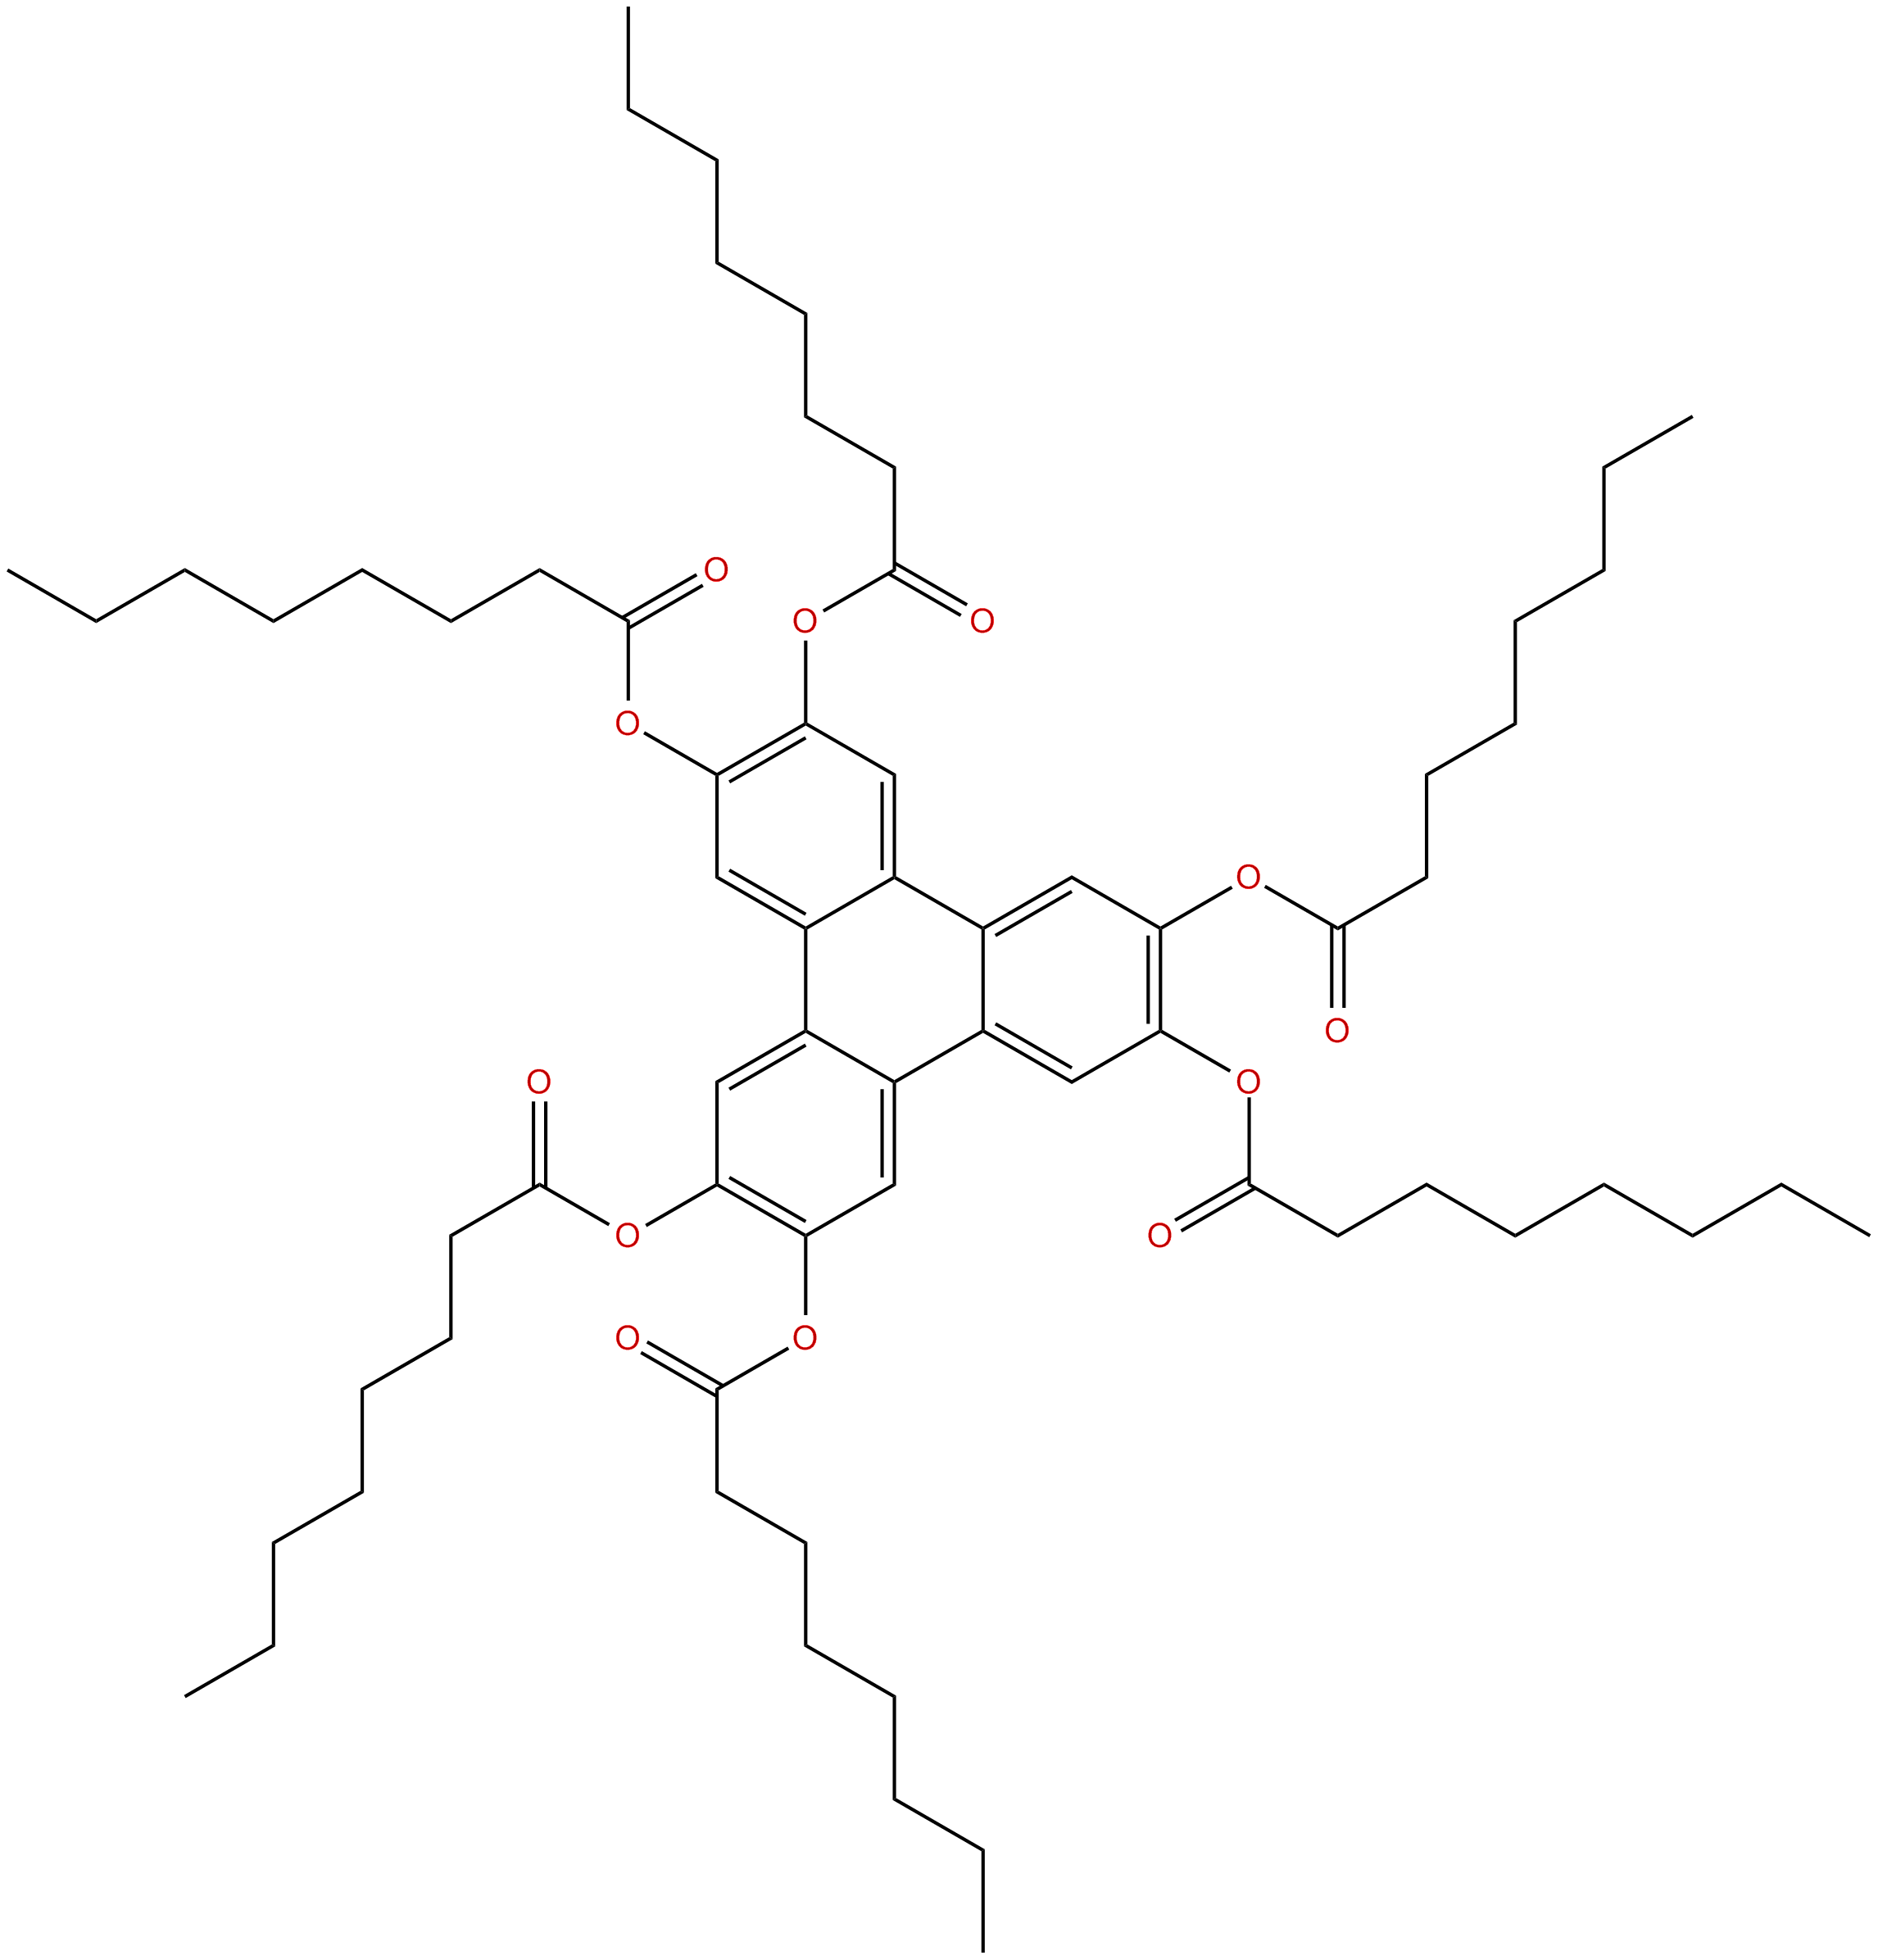 Image of 1,2,6,7,10,11-triphenylenehexayl hexa(octanoate)